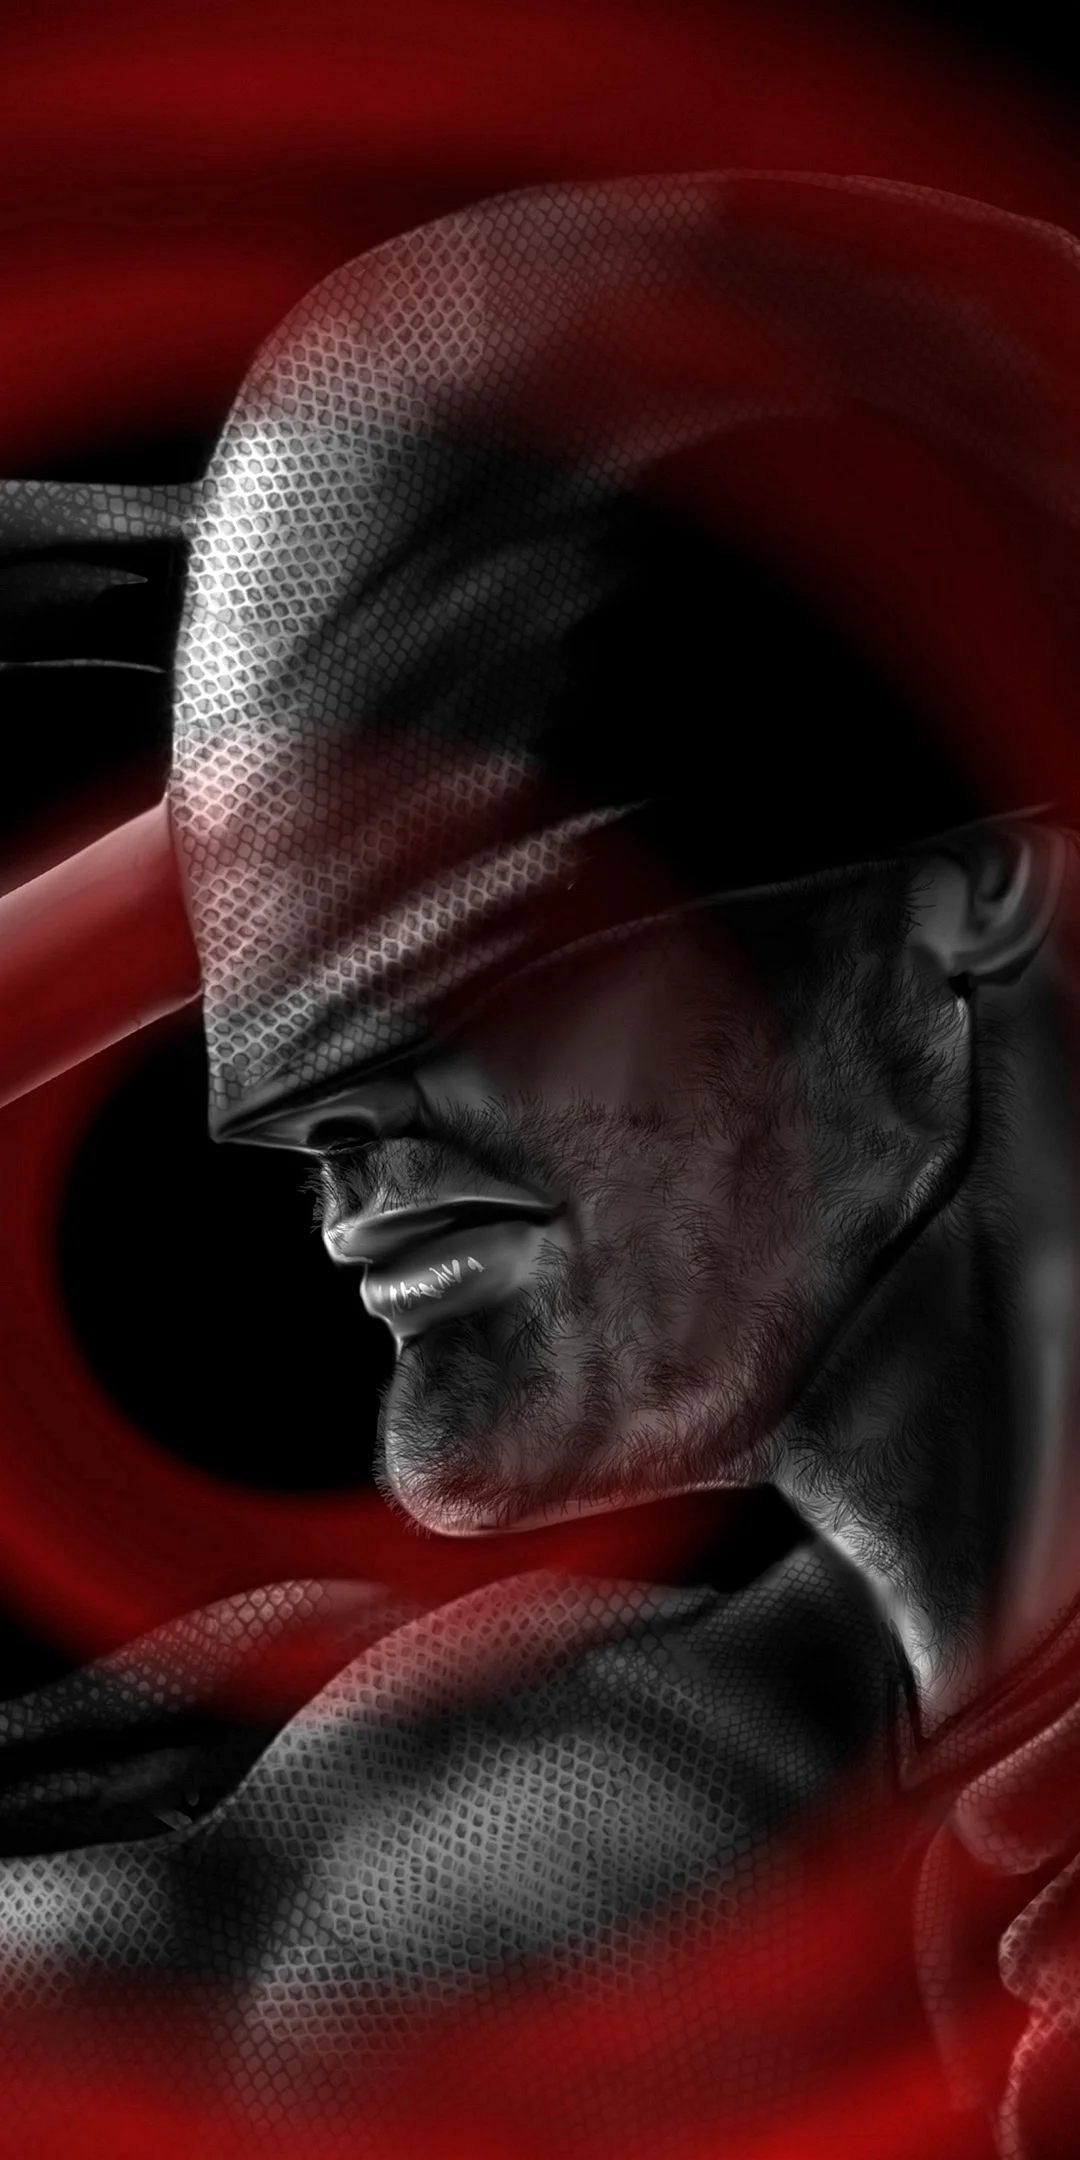 Daredevil Art 4K Wallpaper For iPhone